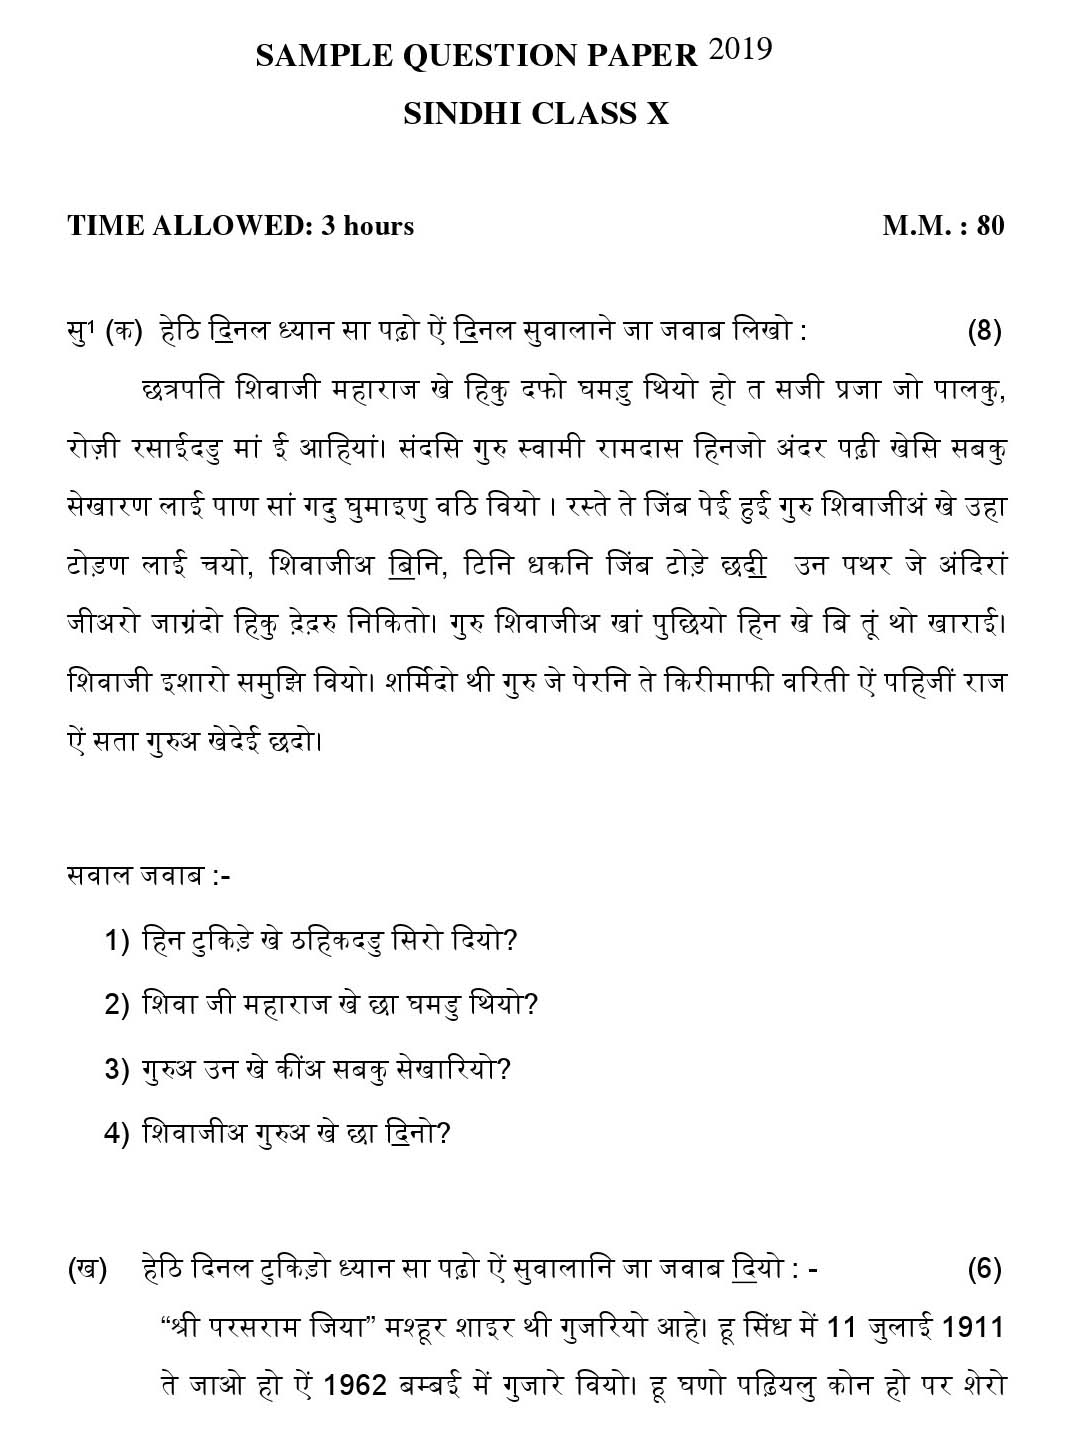 Sindhi CBSE Class X Sample Question Paper 2018-19 - Image 1